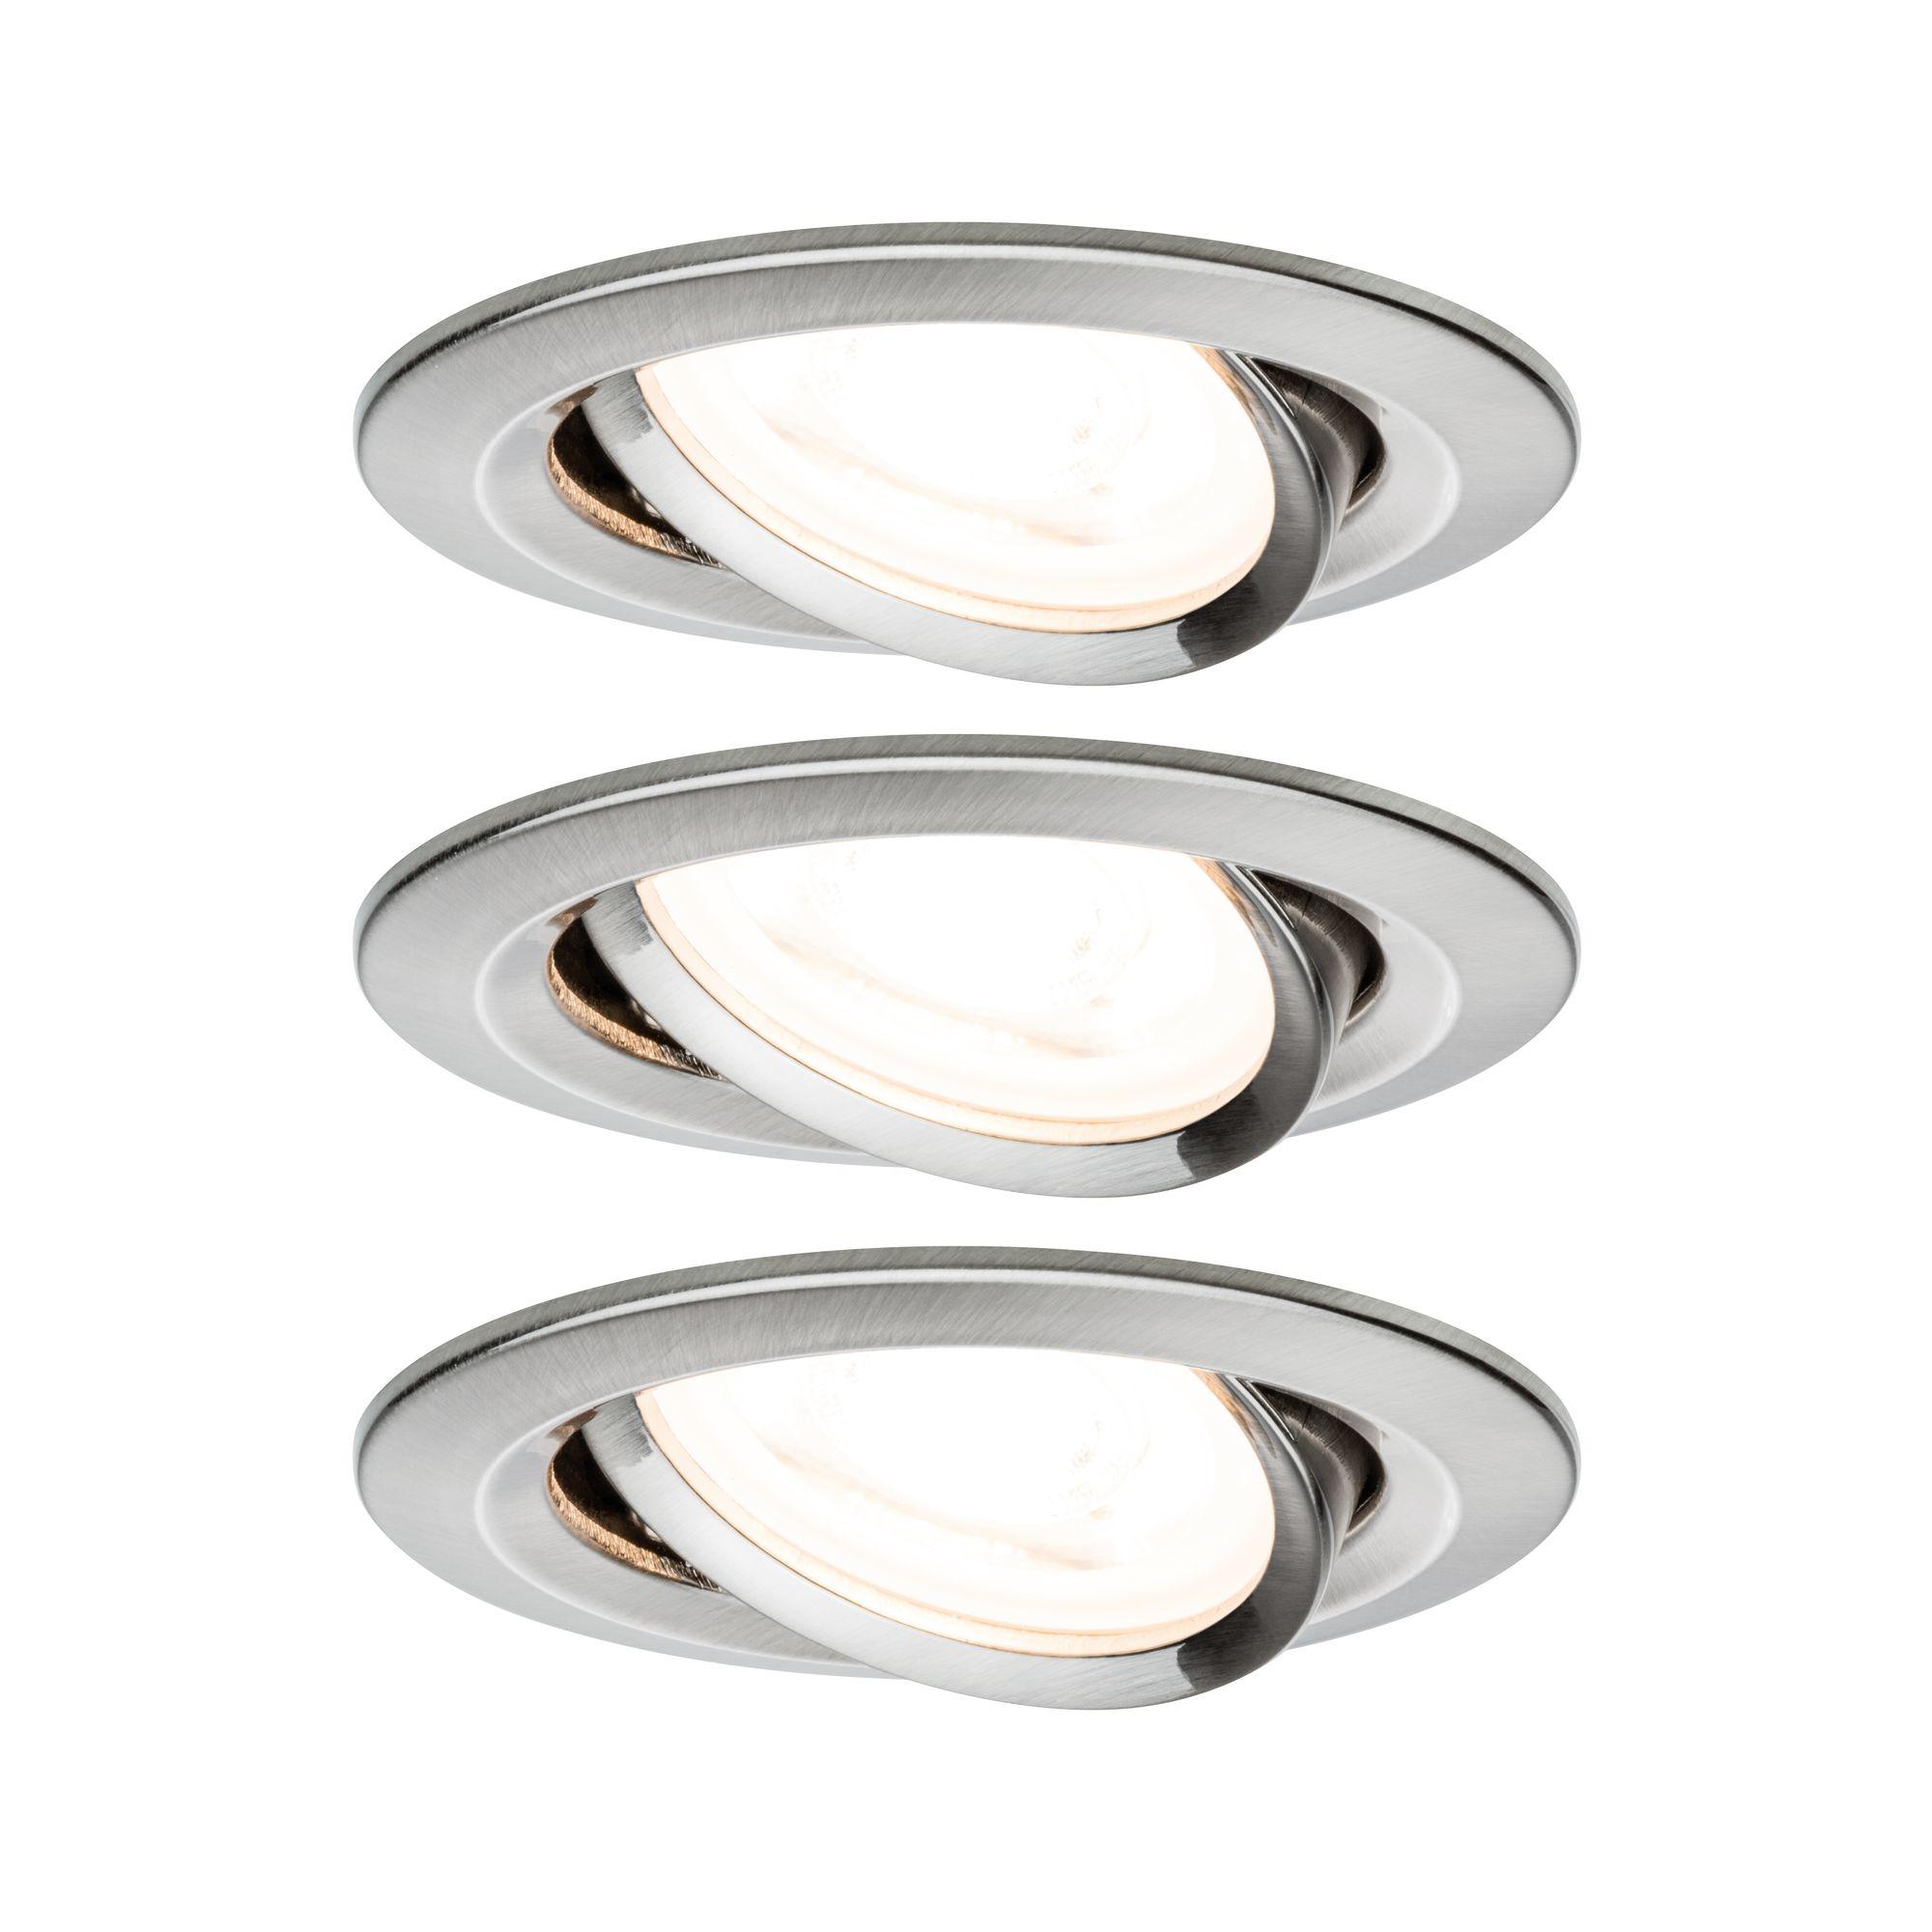 Vestavné svítidlo LED Nova kruhové 3x6,5W GU10 kov kartáčovaný nastavitelné 3-krokové-stmívatelné 934.65 - PAULMANN